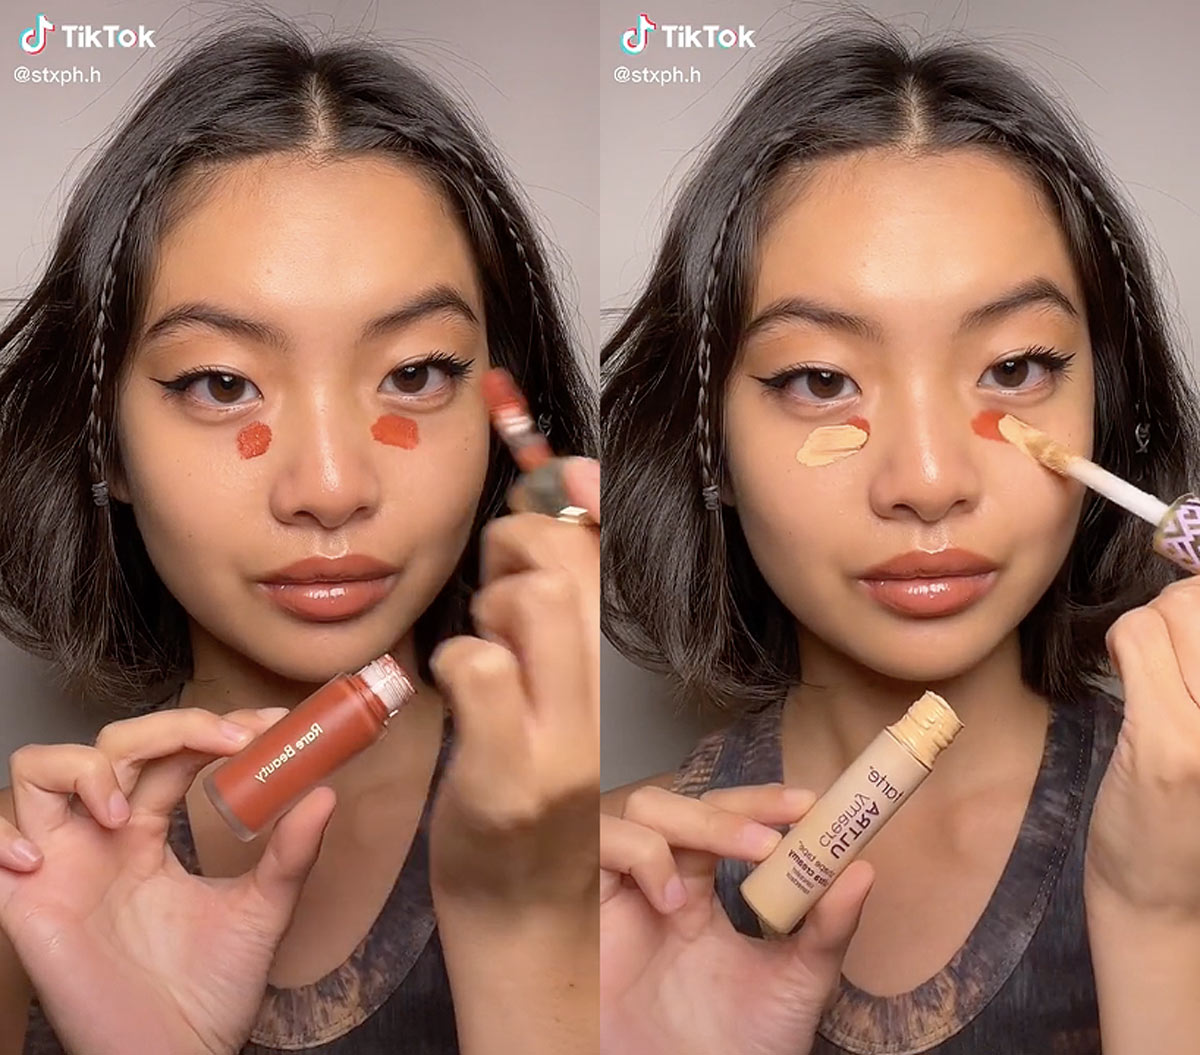 under eye blush tiktok trend tutorial